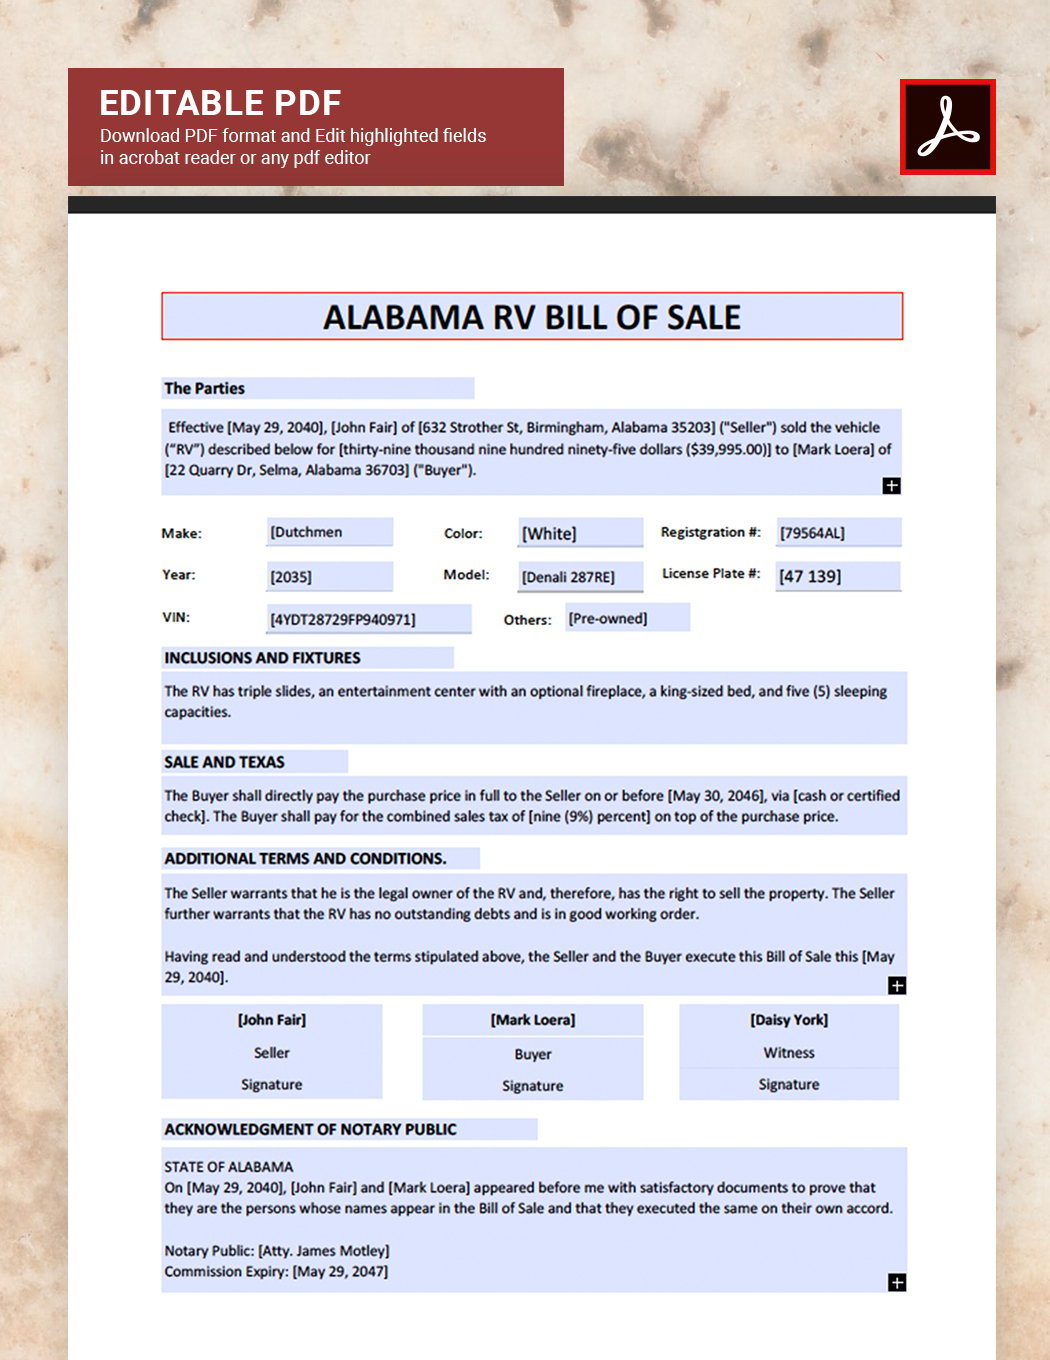 Alabama RV Bill of Sale Template